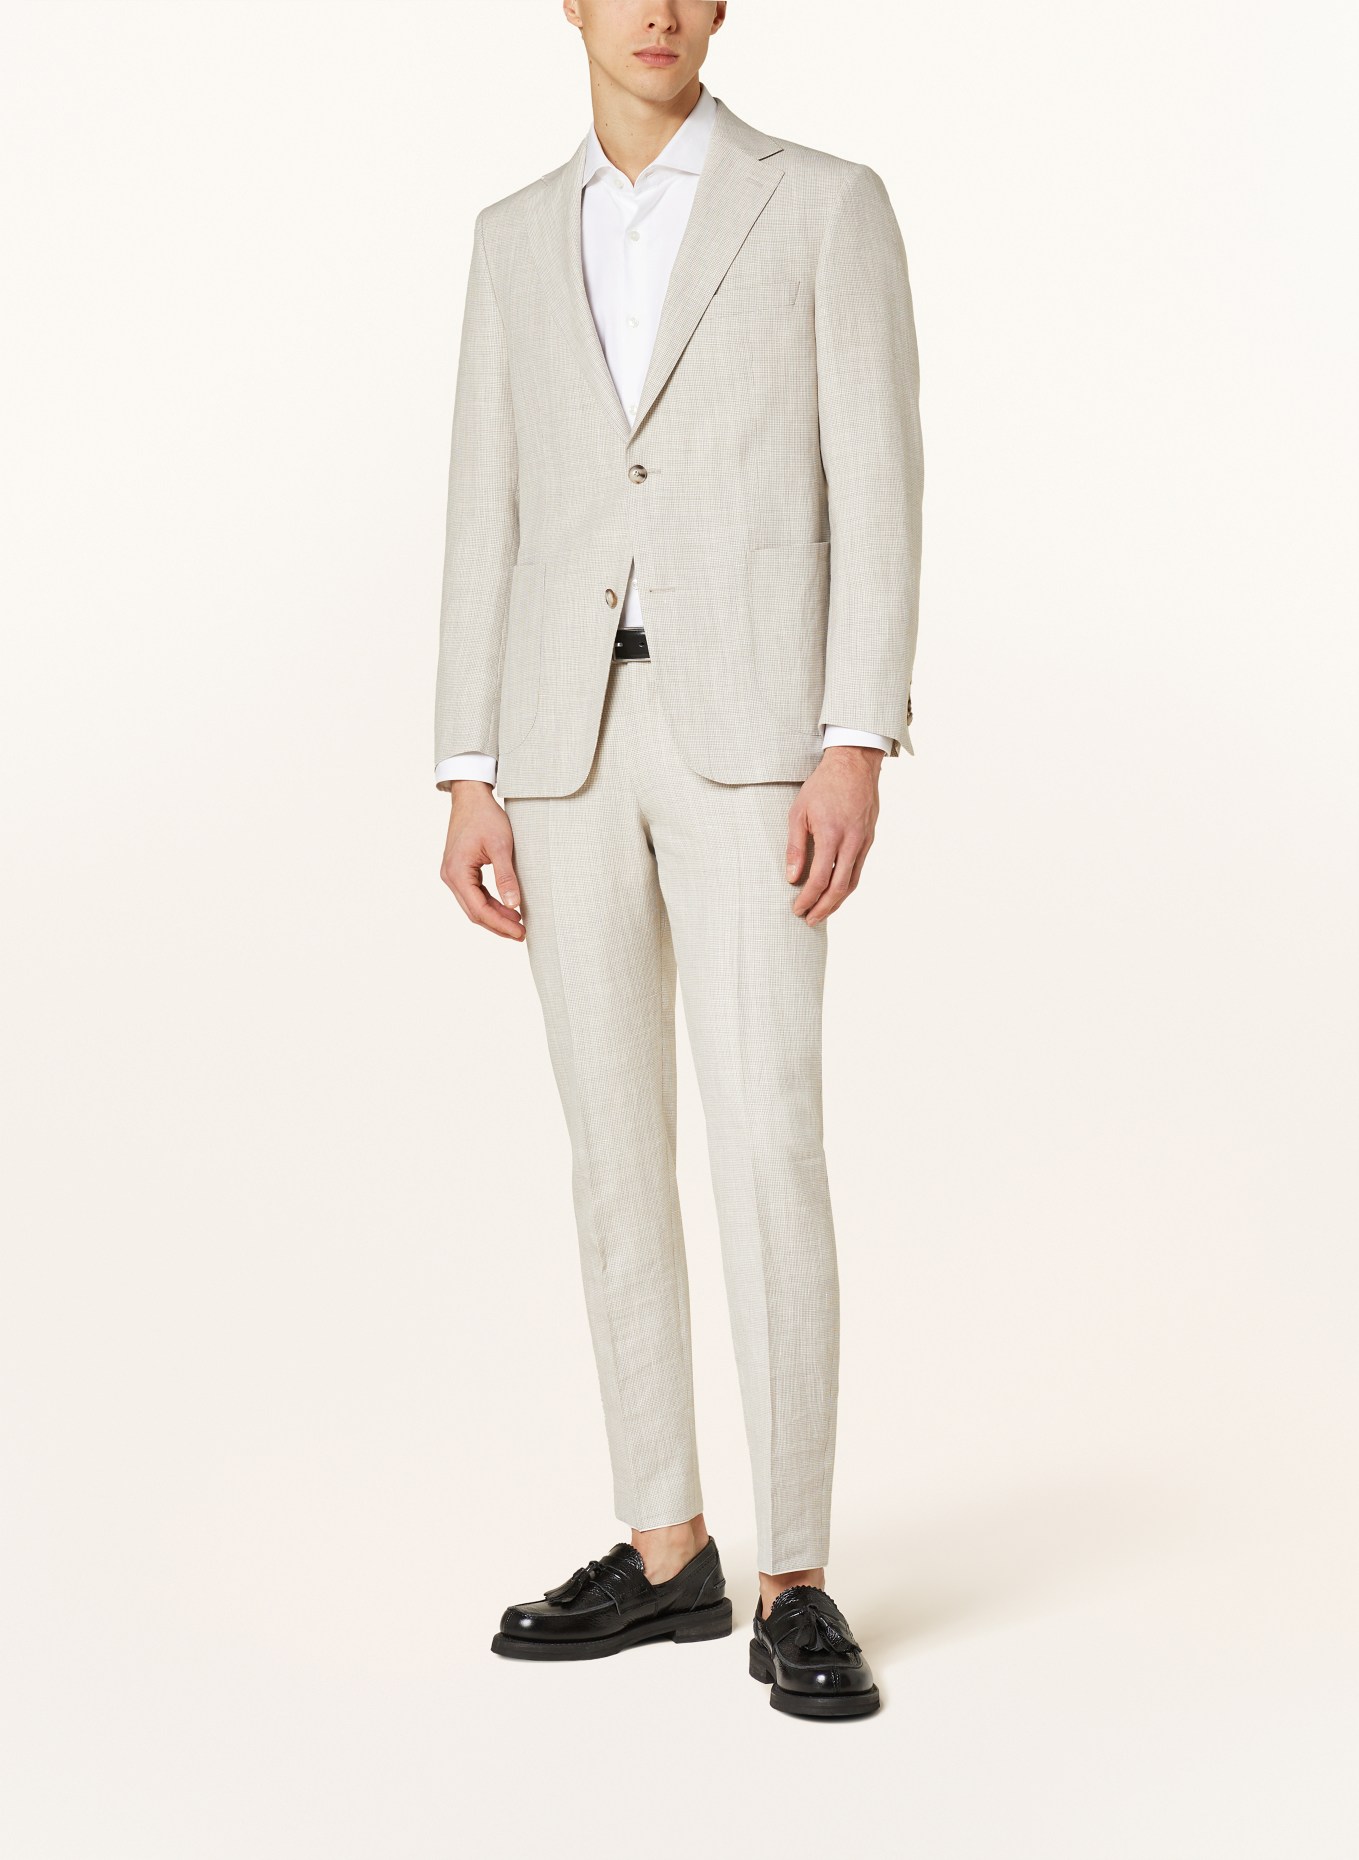 EDUARD DRESSLER Suit jacket comfort fit with linen, Color: 070 BEIGE (Image 2)